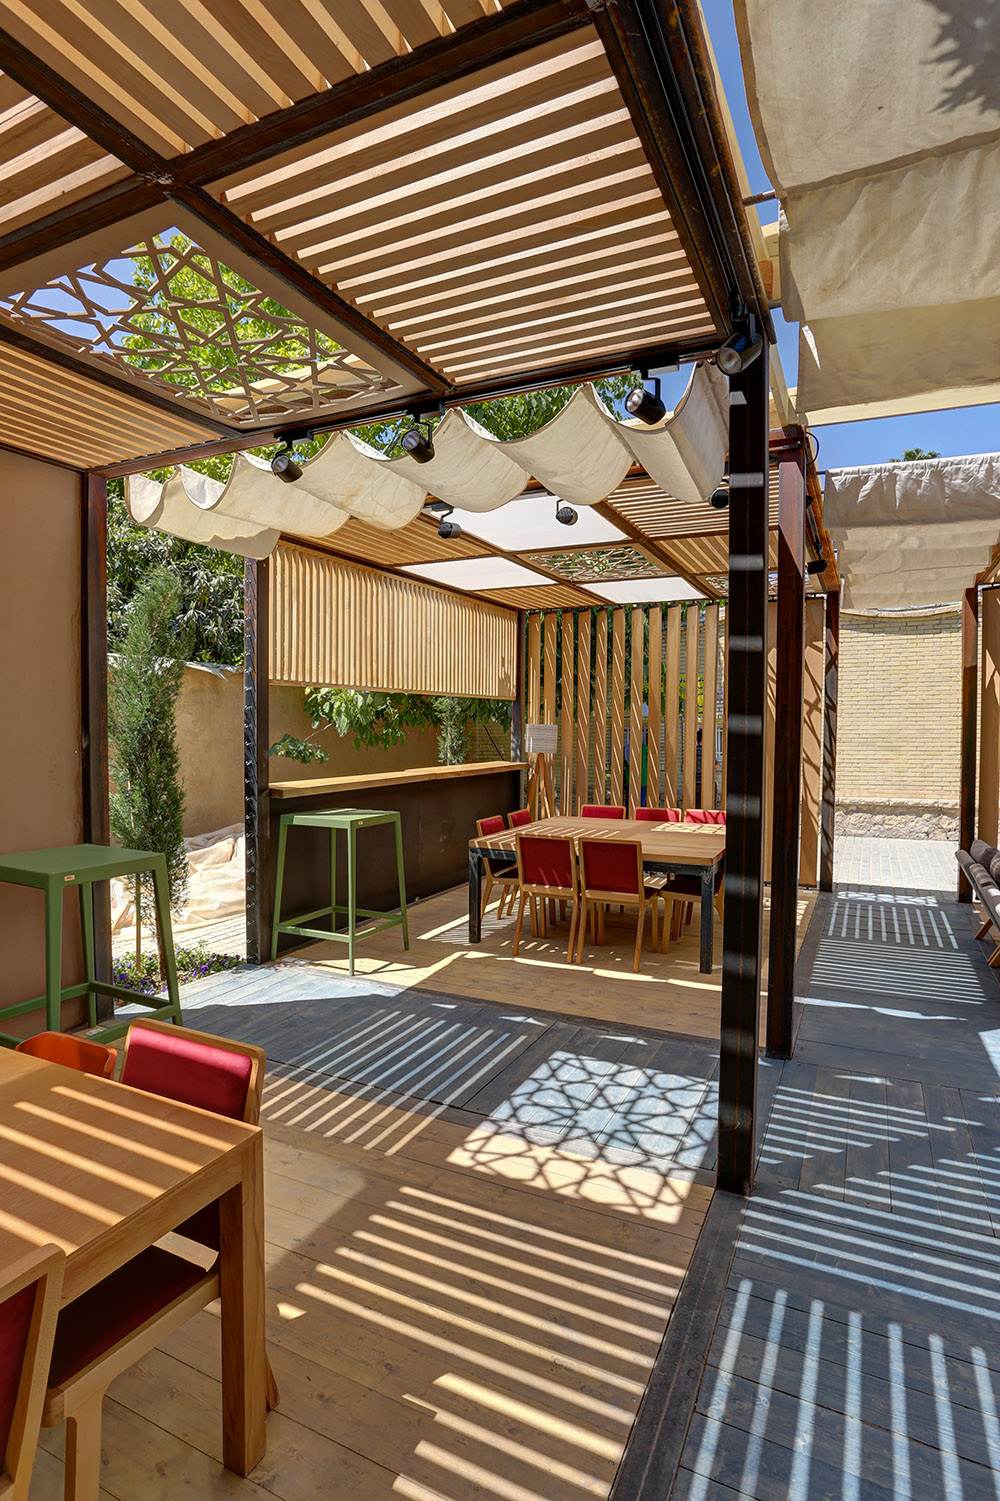 picture no. 3 ofGhavam al-din Pavilion project, designed by Ahmad Ghodsimanesh & Partners